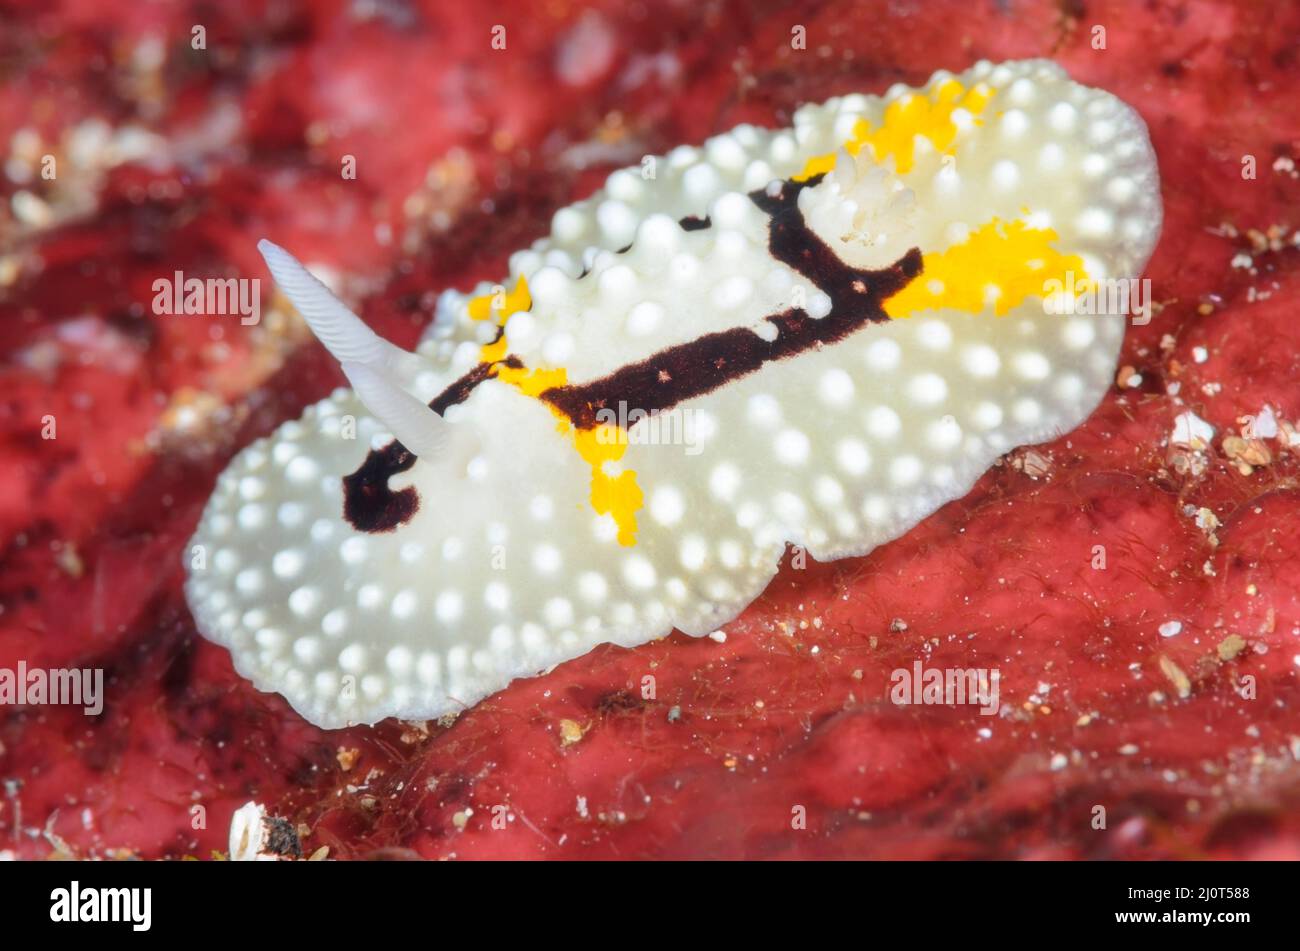 Sea slug or nudibranch, Aldisa albatrossae, Alor, Nusa Tenggara, Indonesia, Pacific Stock Photo